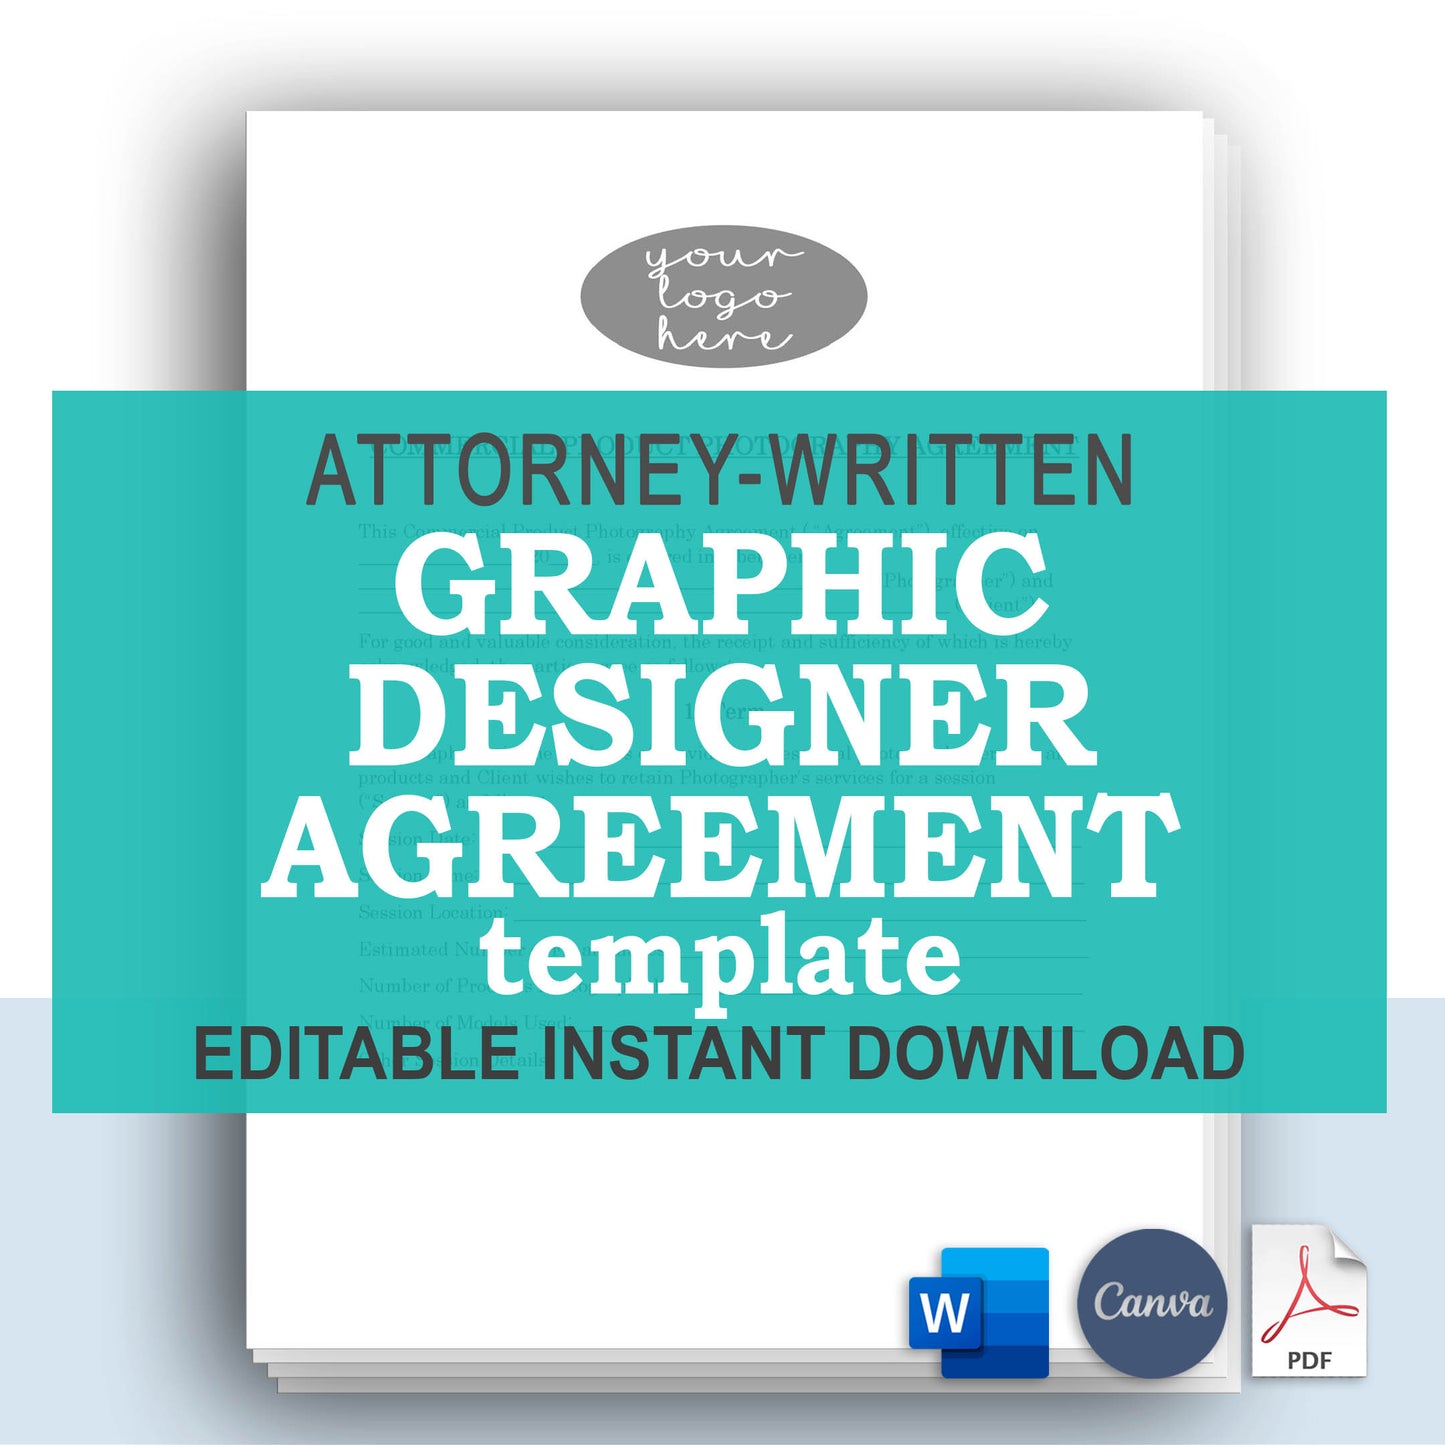 Graphic Design Contract Template, Attorney-Written & Editable